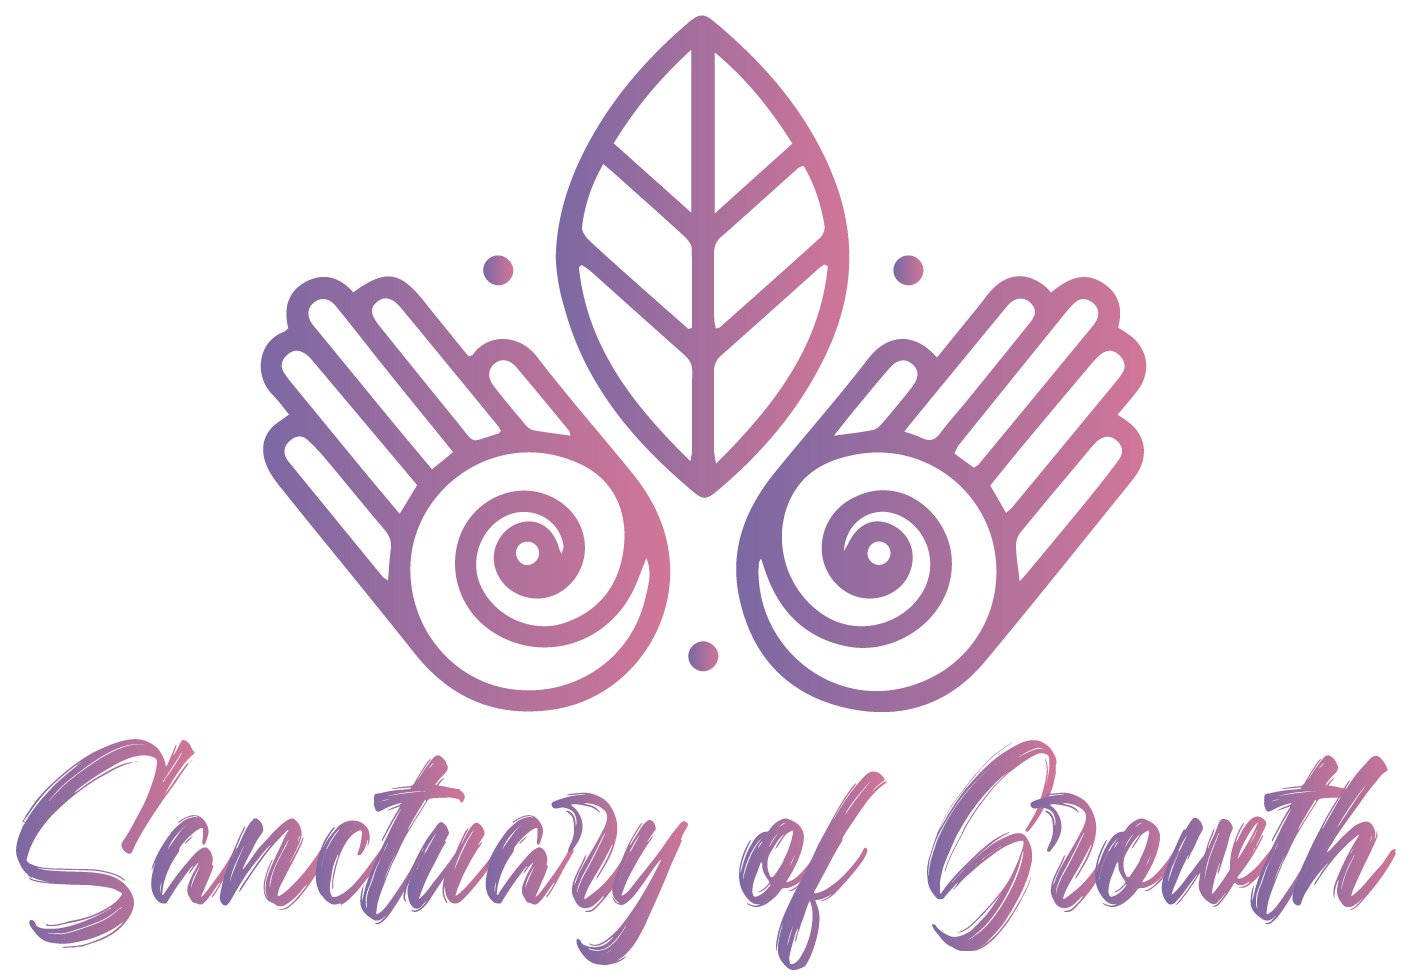 The Sanctuary of Growth, LLC